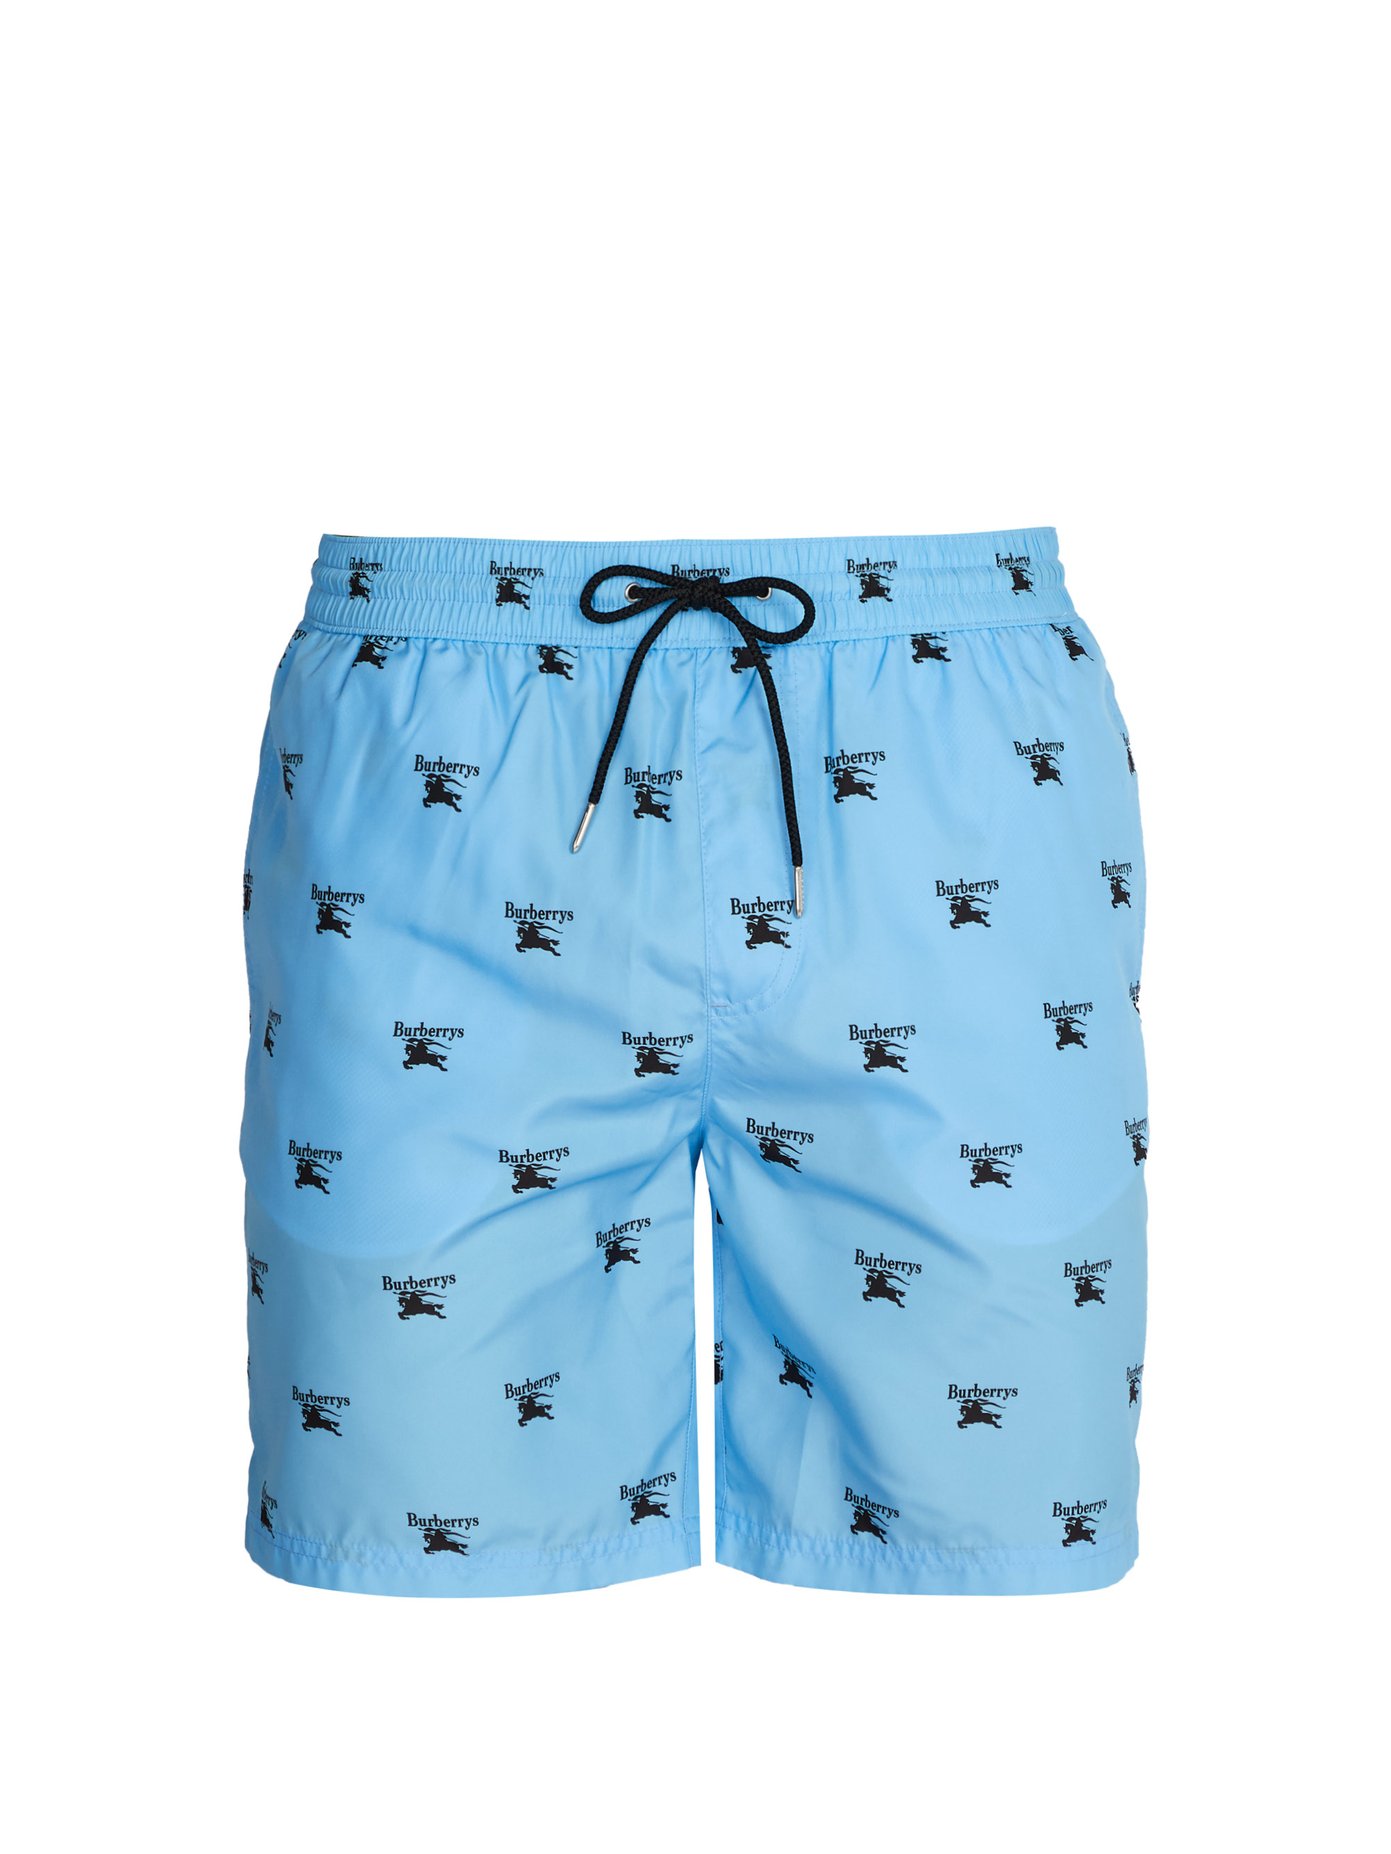 burberry swim shorts blue